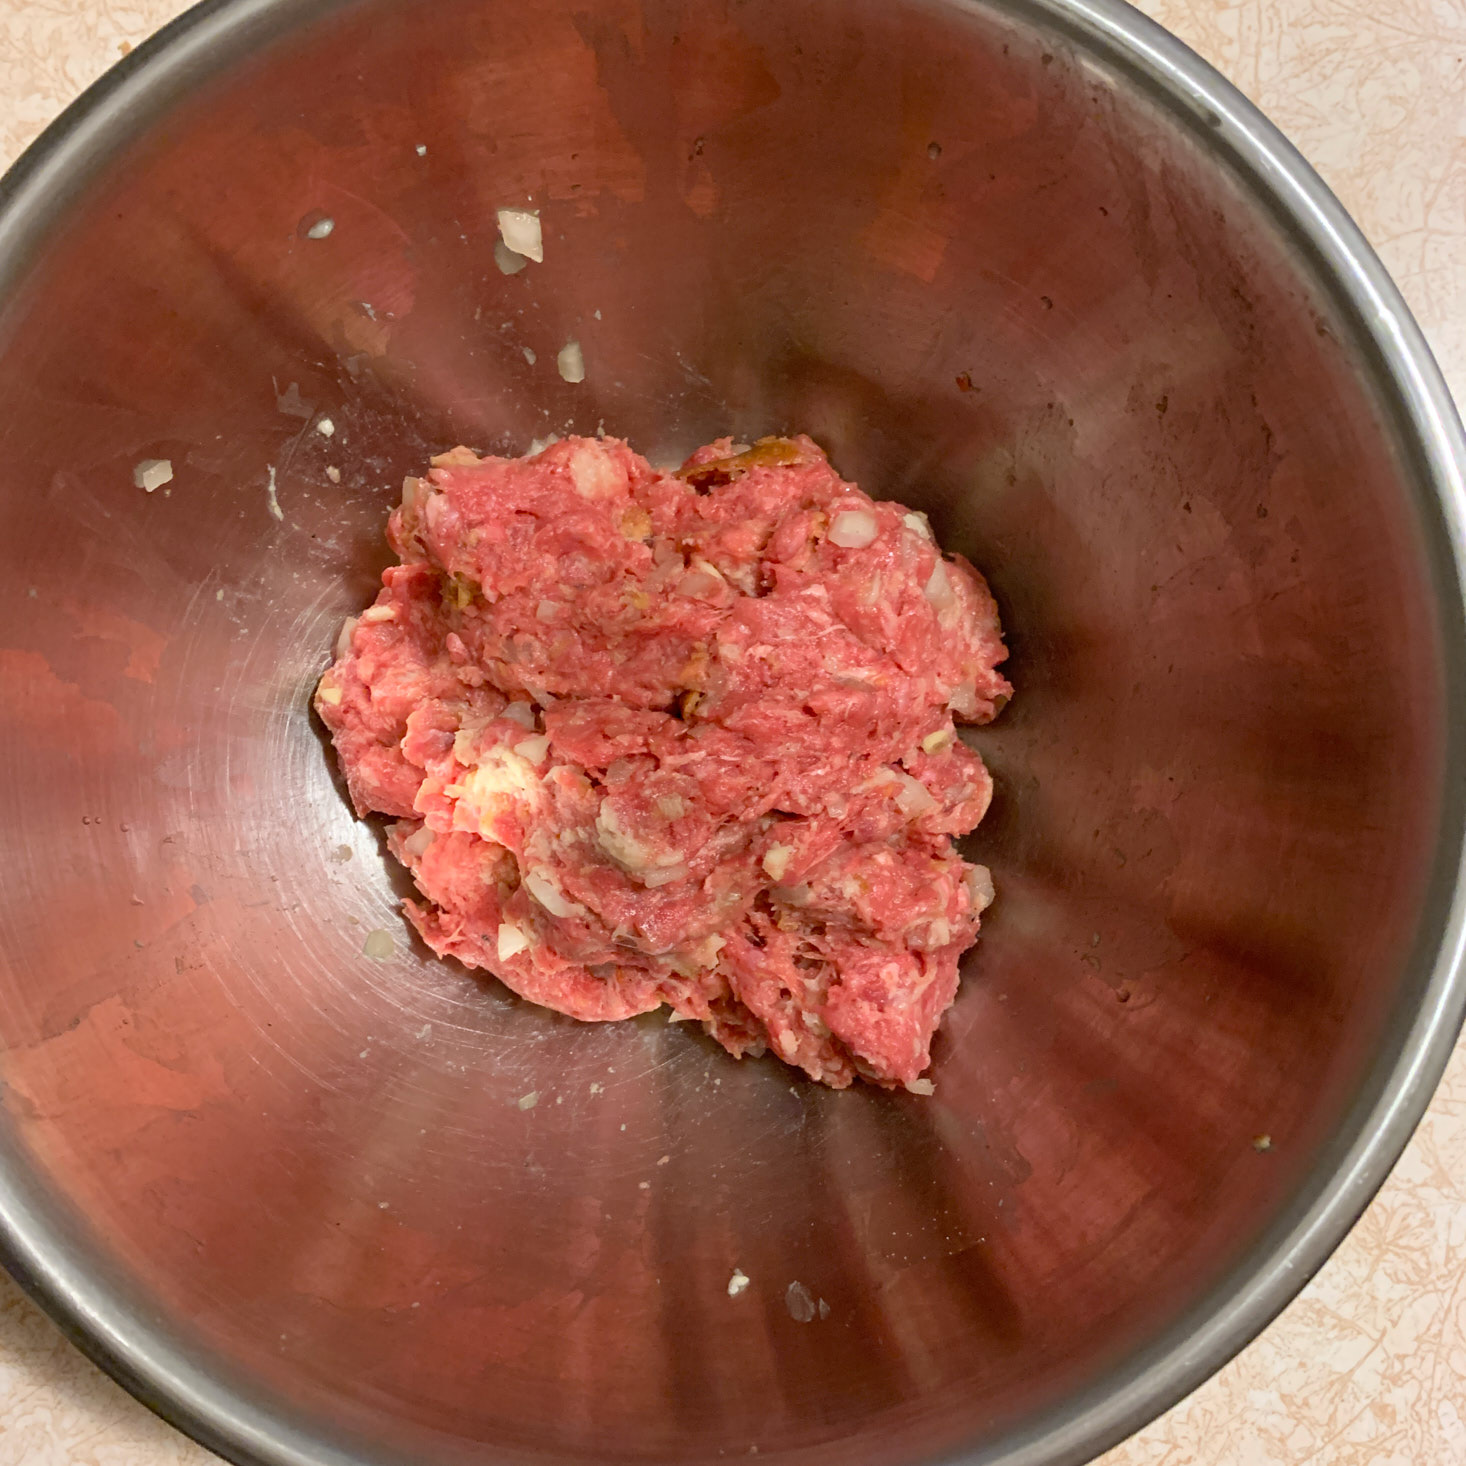 Beef mixture in bowl for meatballs